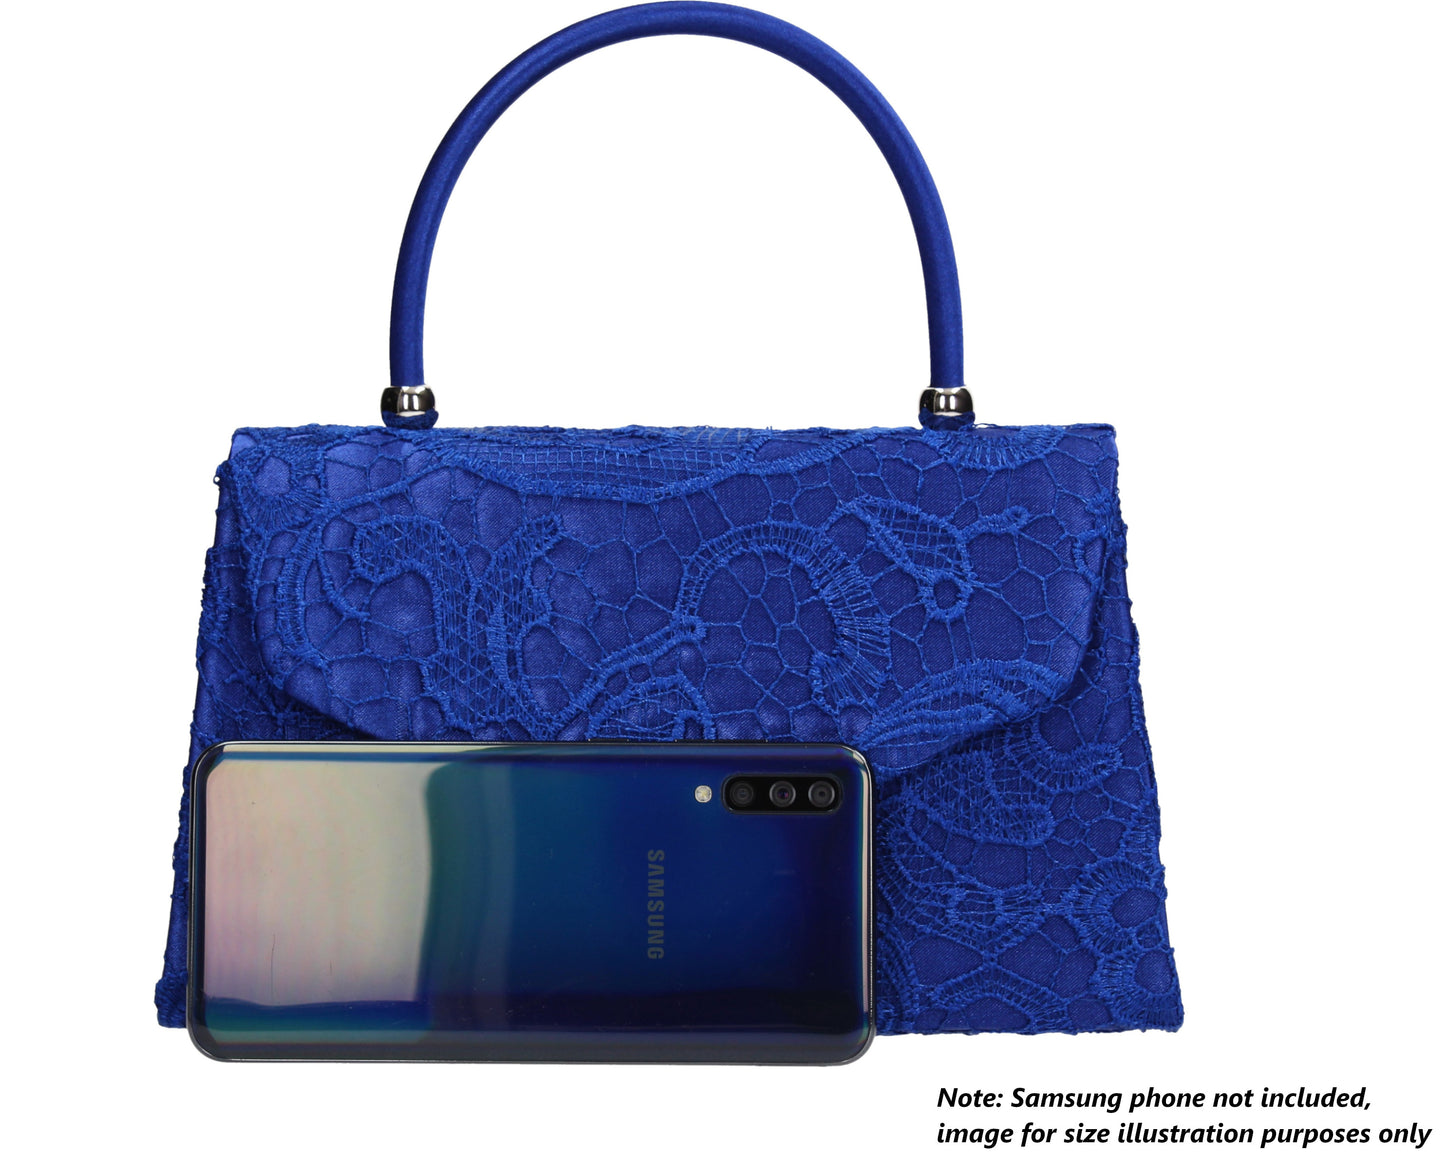 Kendall Lace Clutch Bag Royal Blue